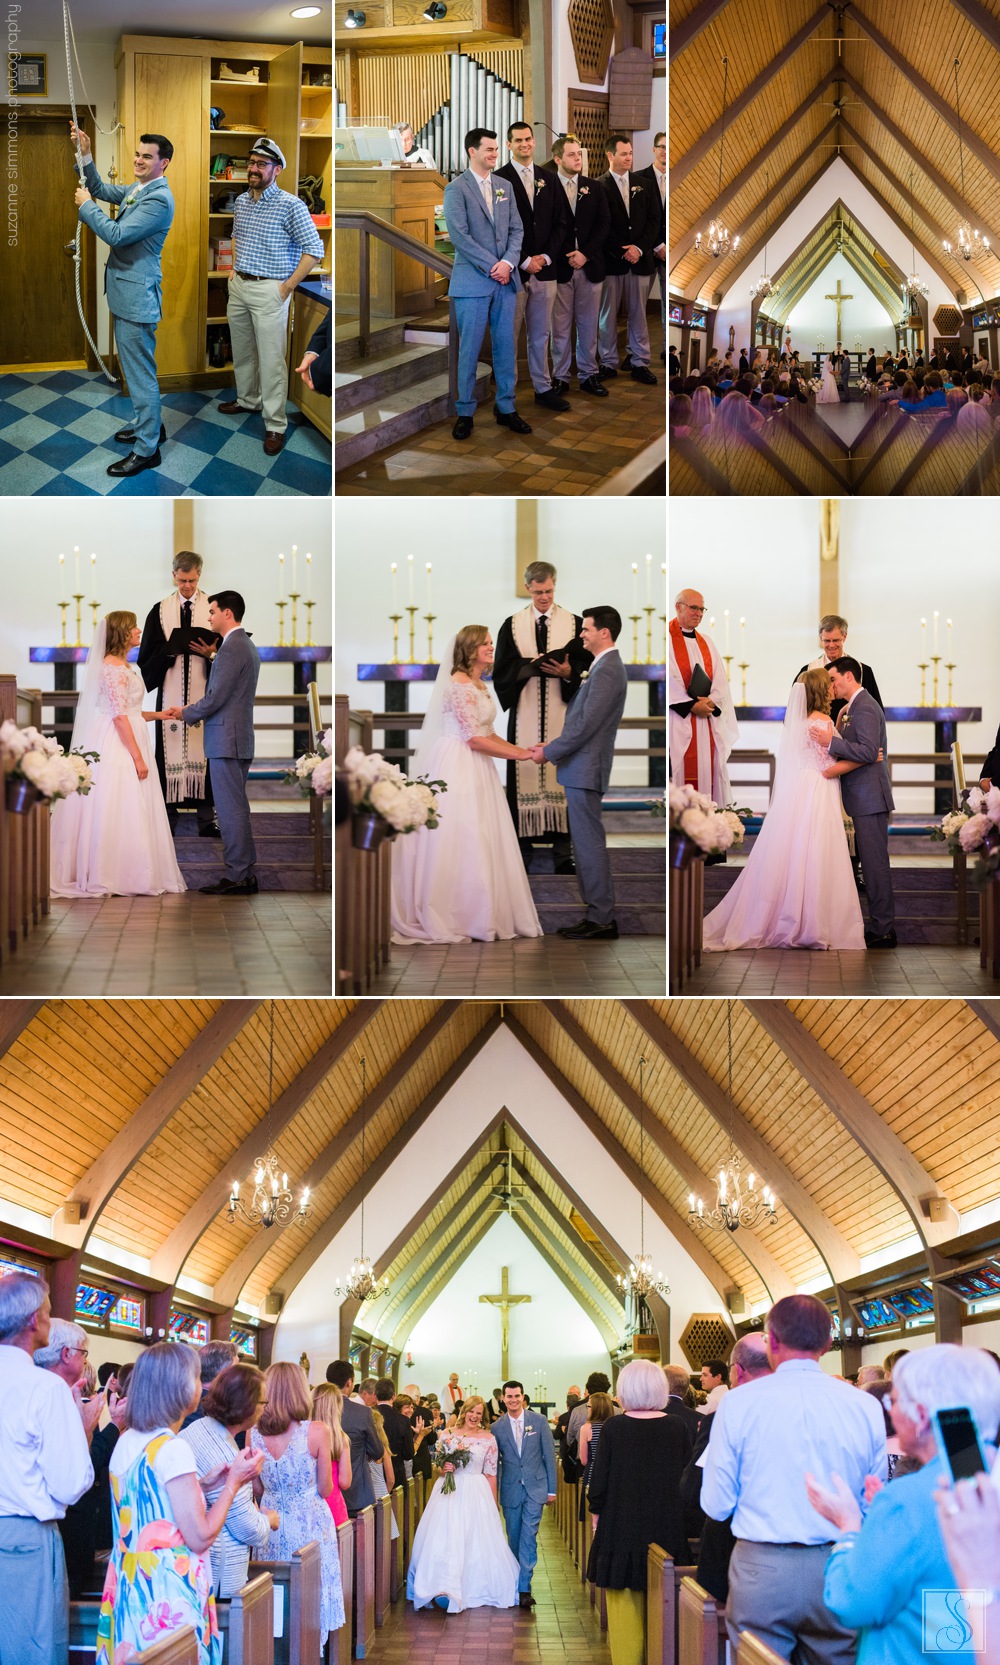 St. Albans wedding in Cape Elizabeth, Maine